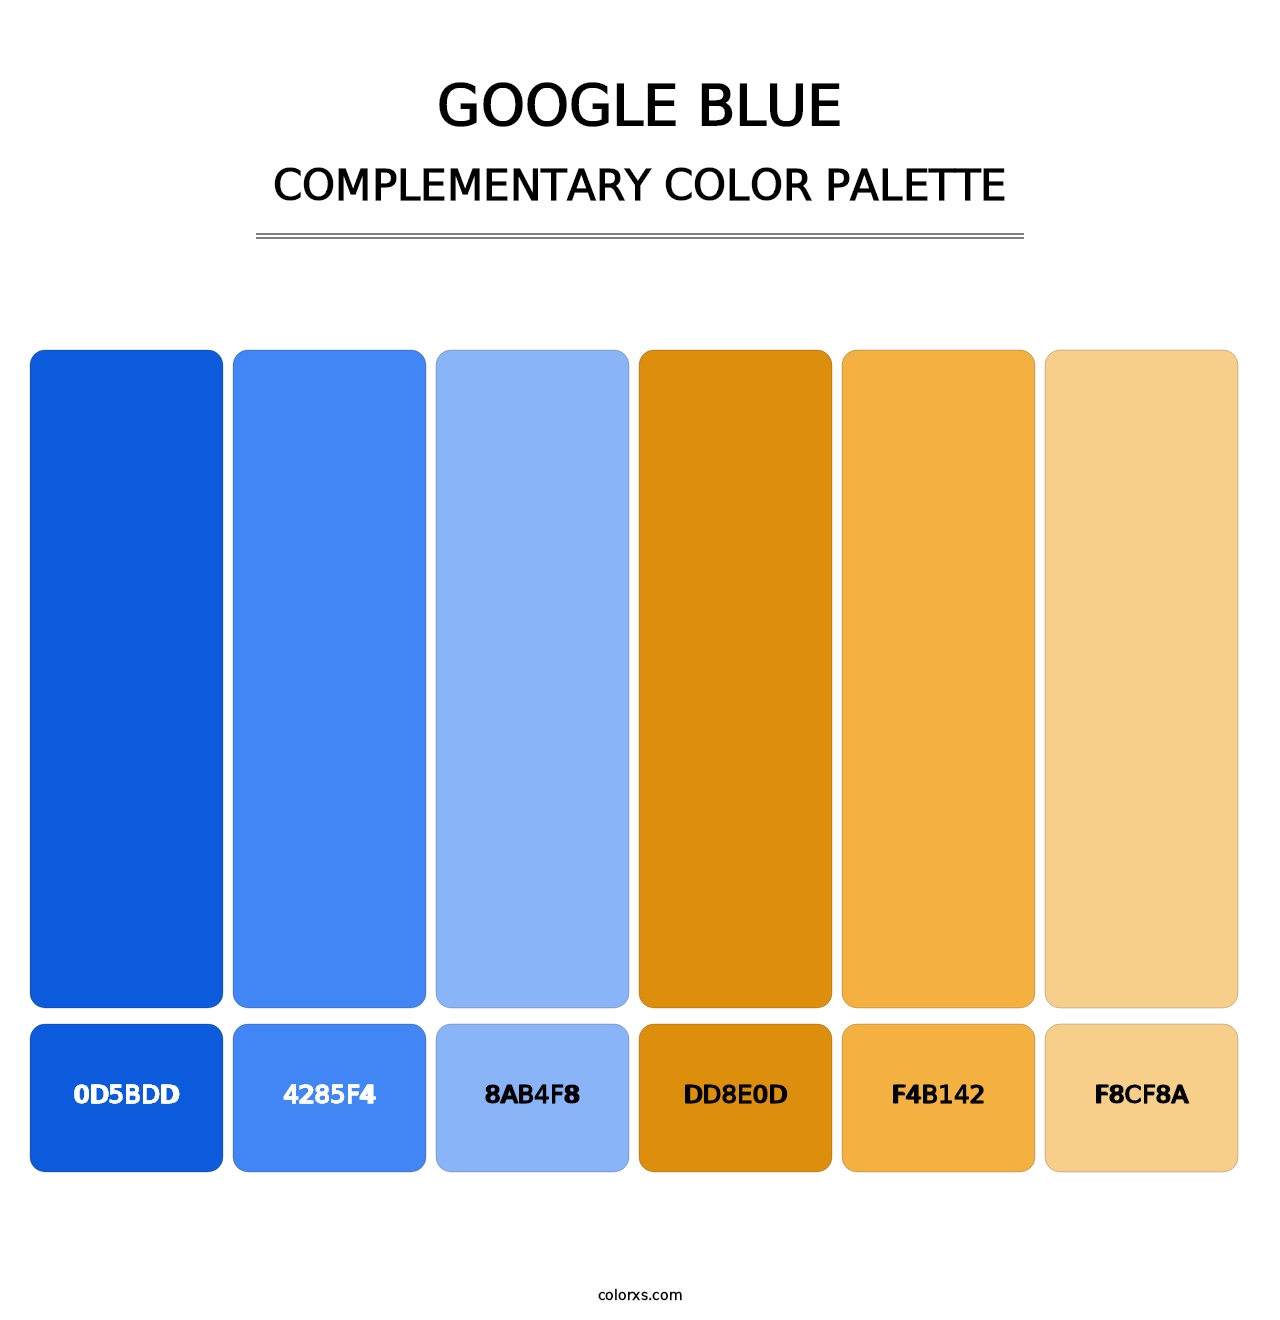 Google Blue - Complementary Color Palette